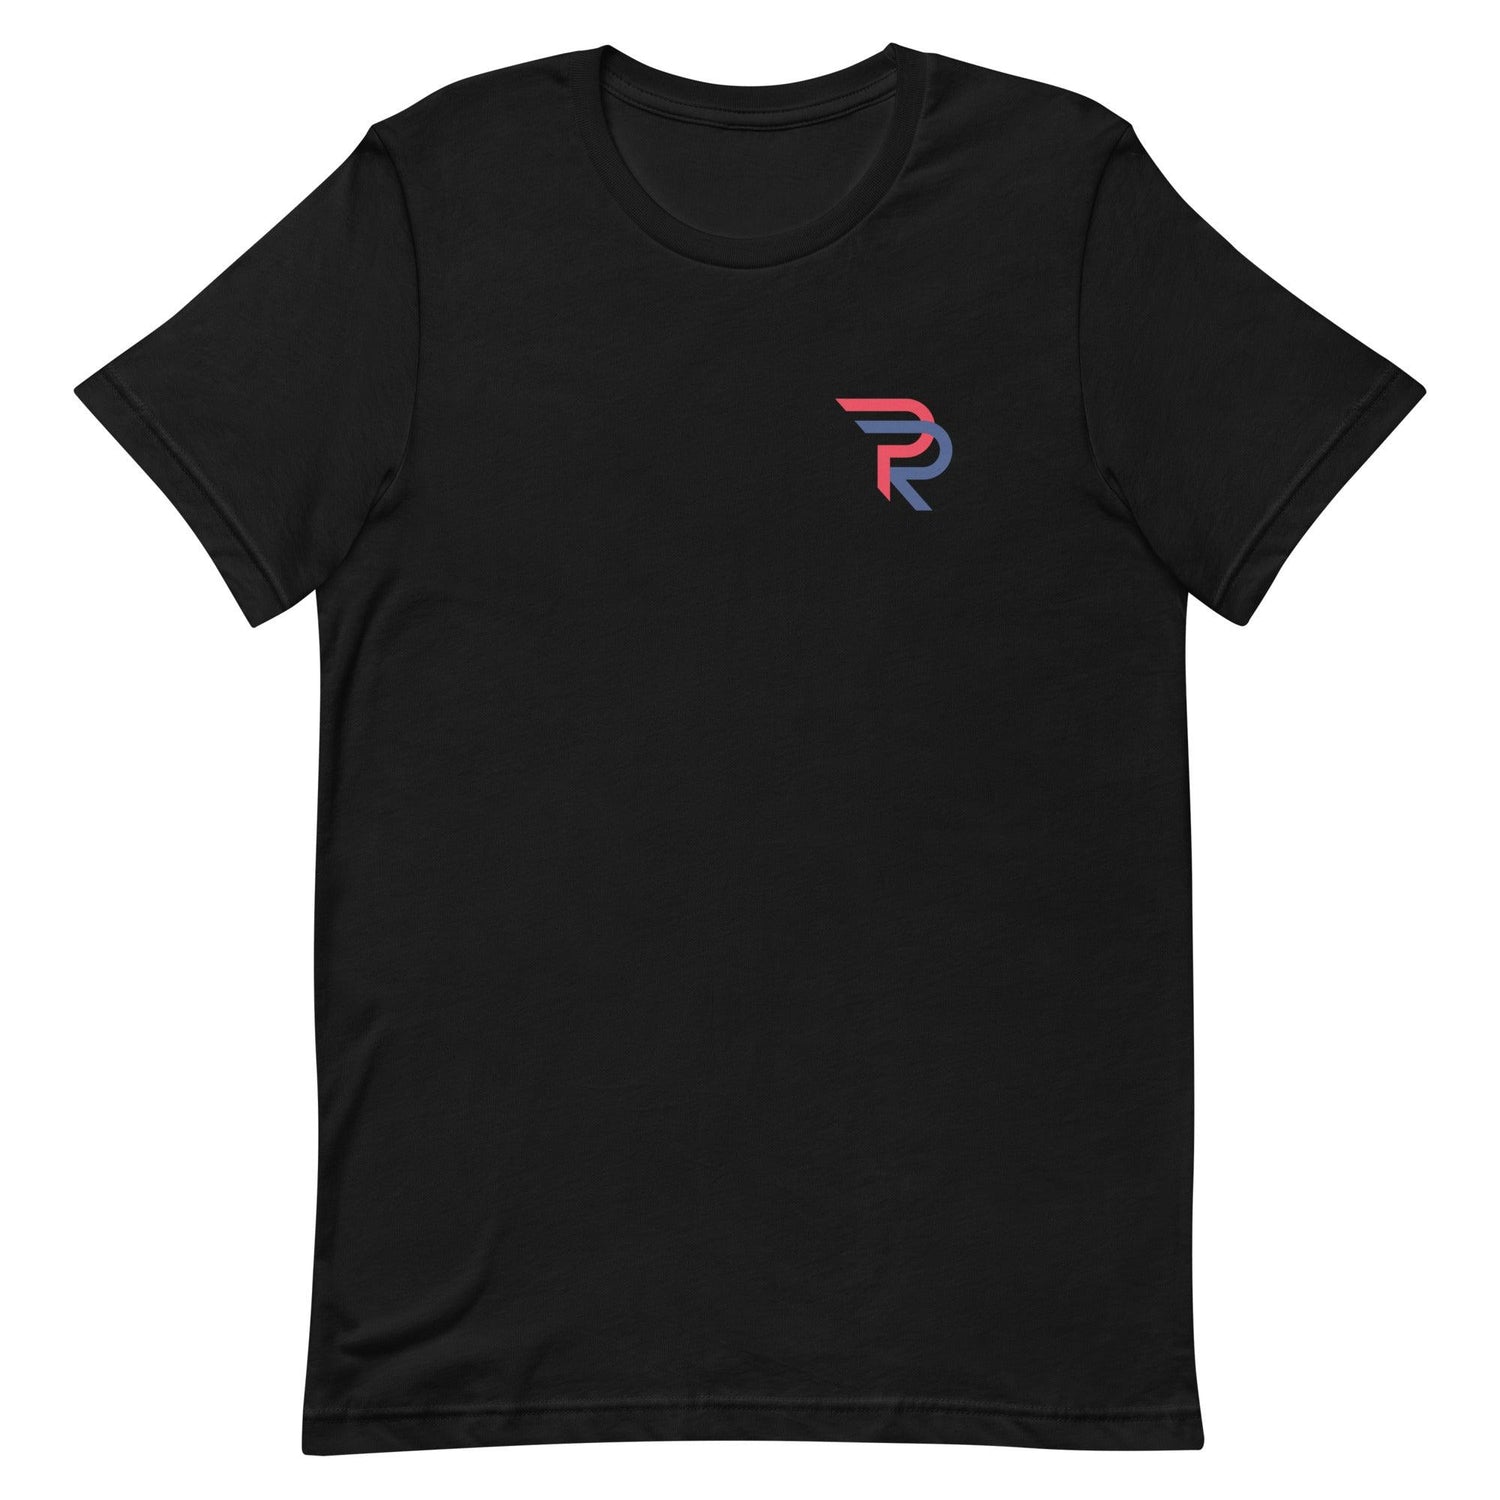 Robbie Peto "Essential" t-shirt - Fan Arch